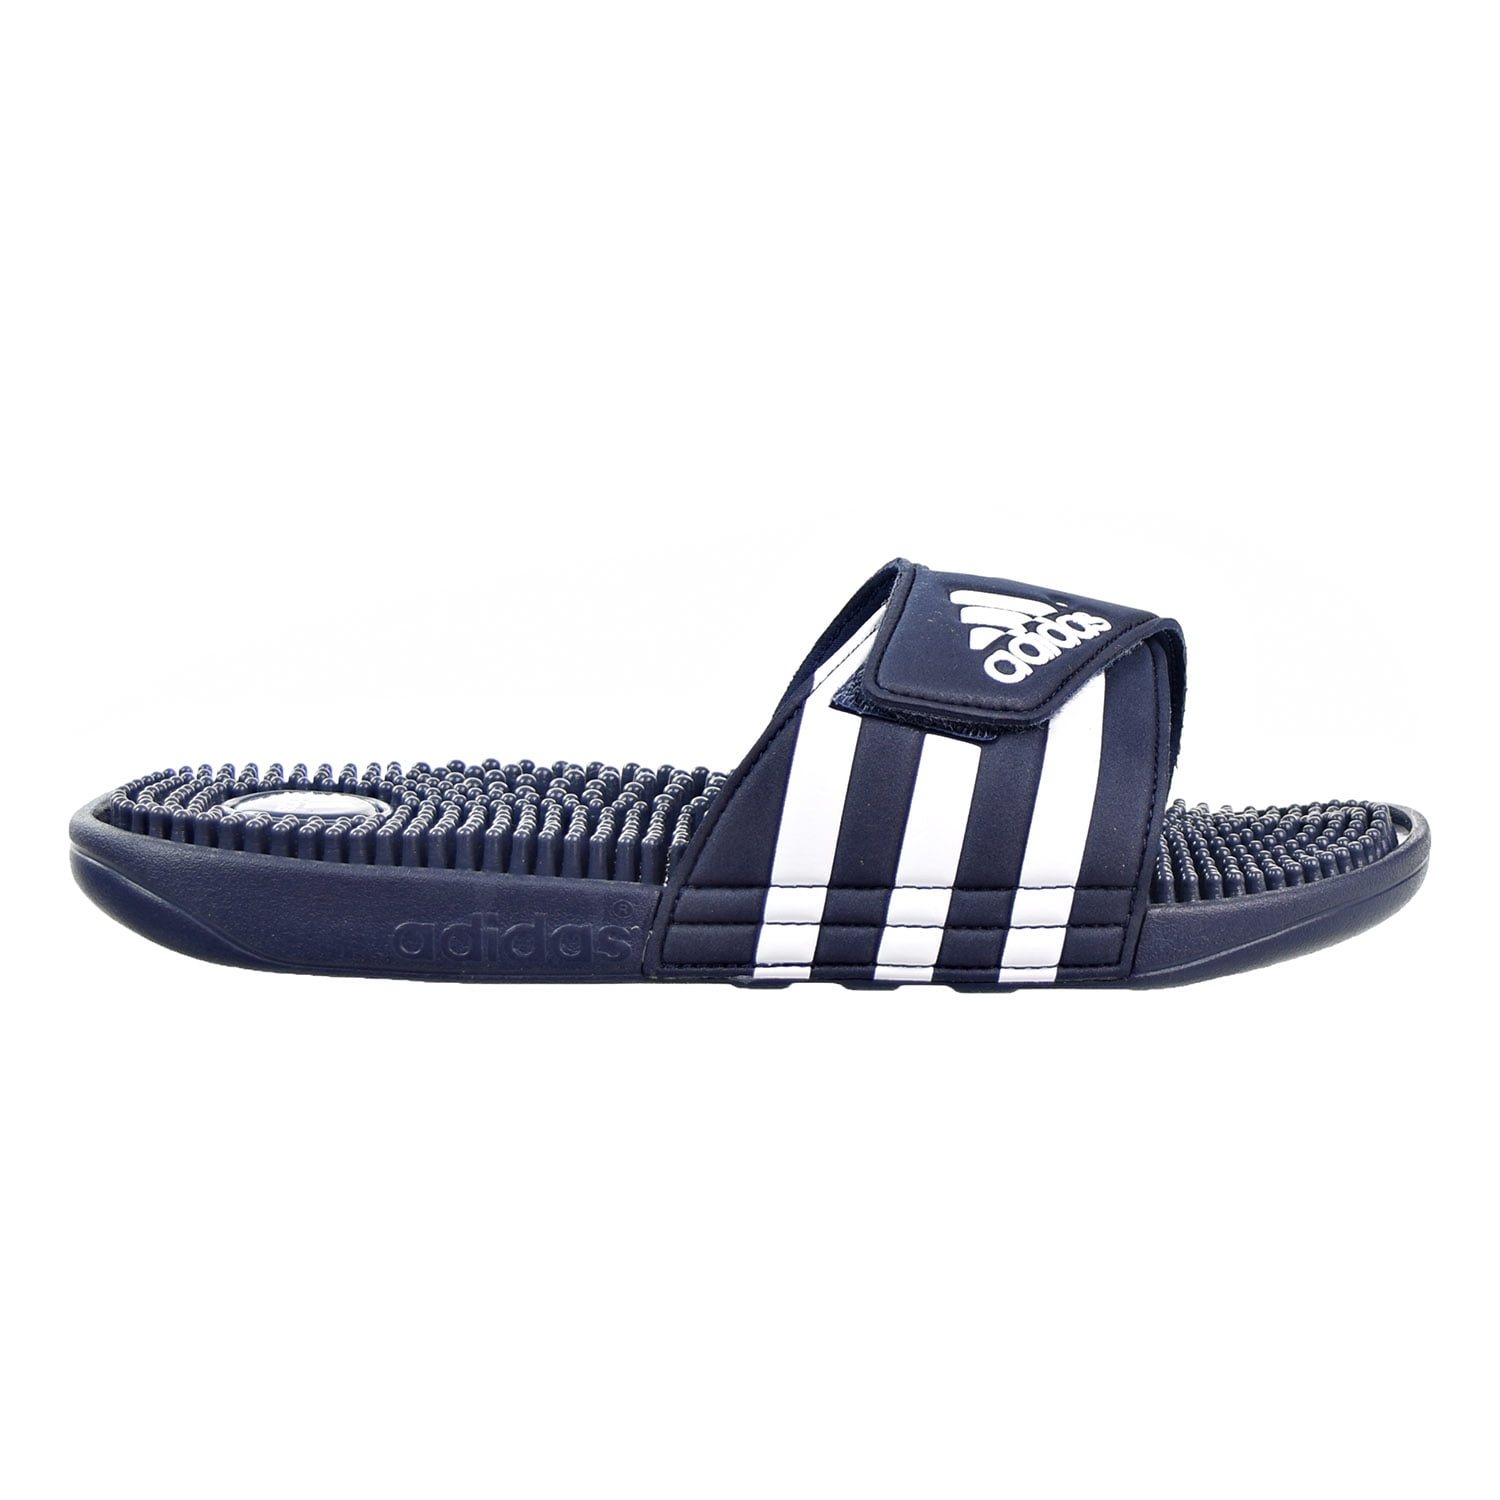 Adidas Adissage Men's Slides Navy/Navy 